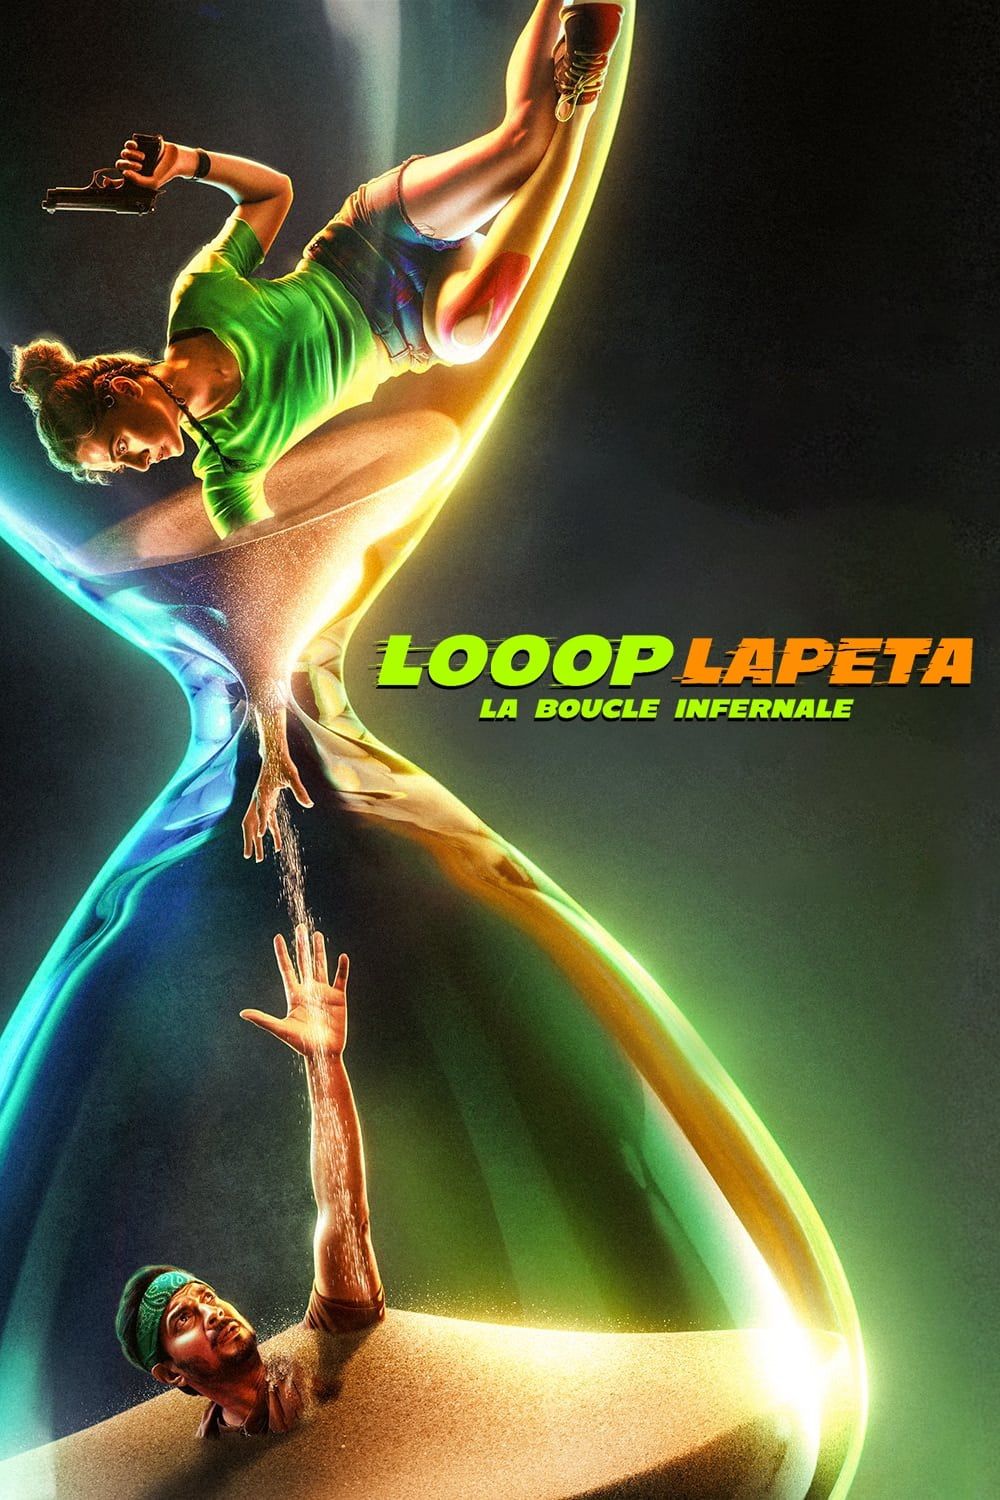 Looop Lapeta : La boucle infernale - Film (2022) streaming VF gratuit complet